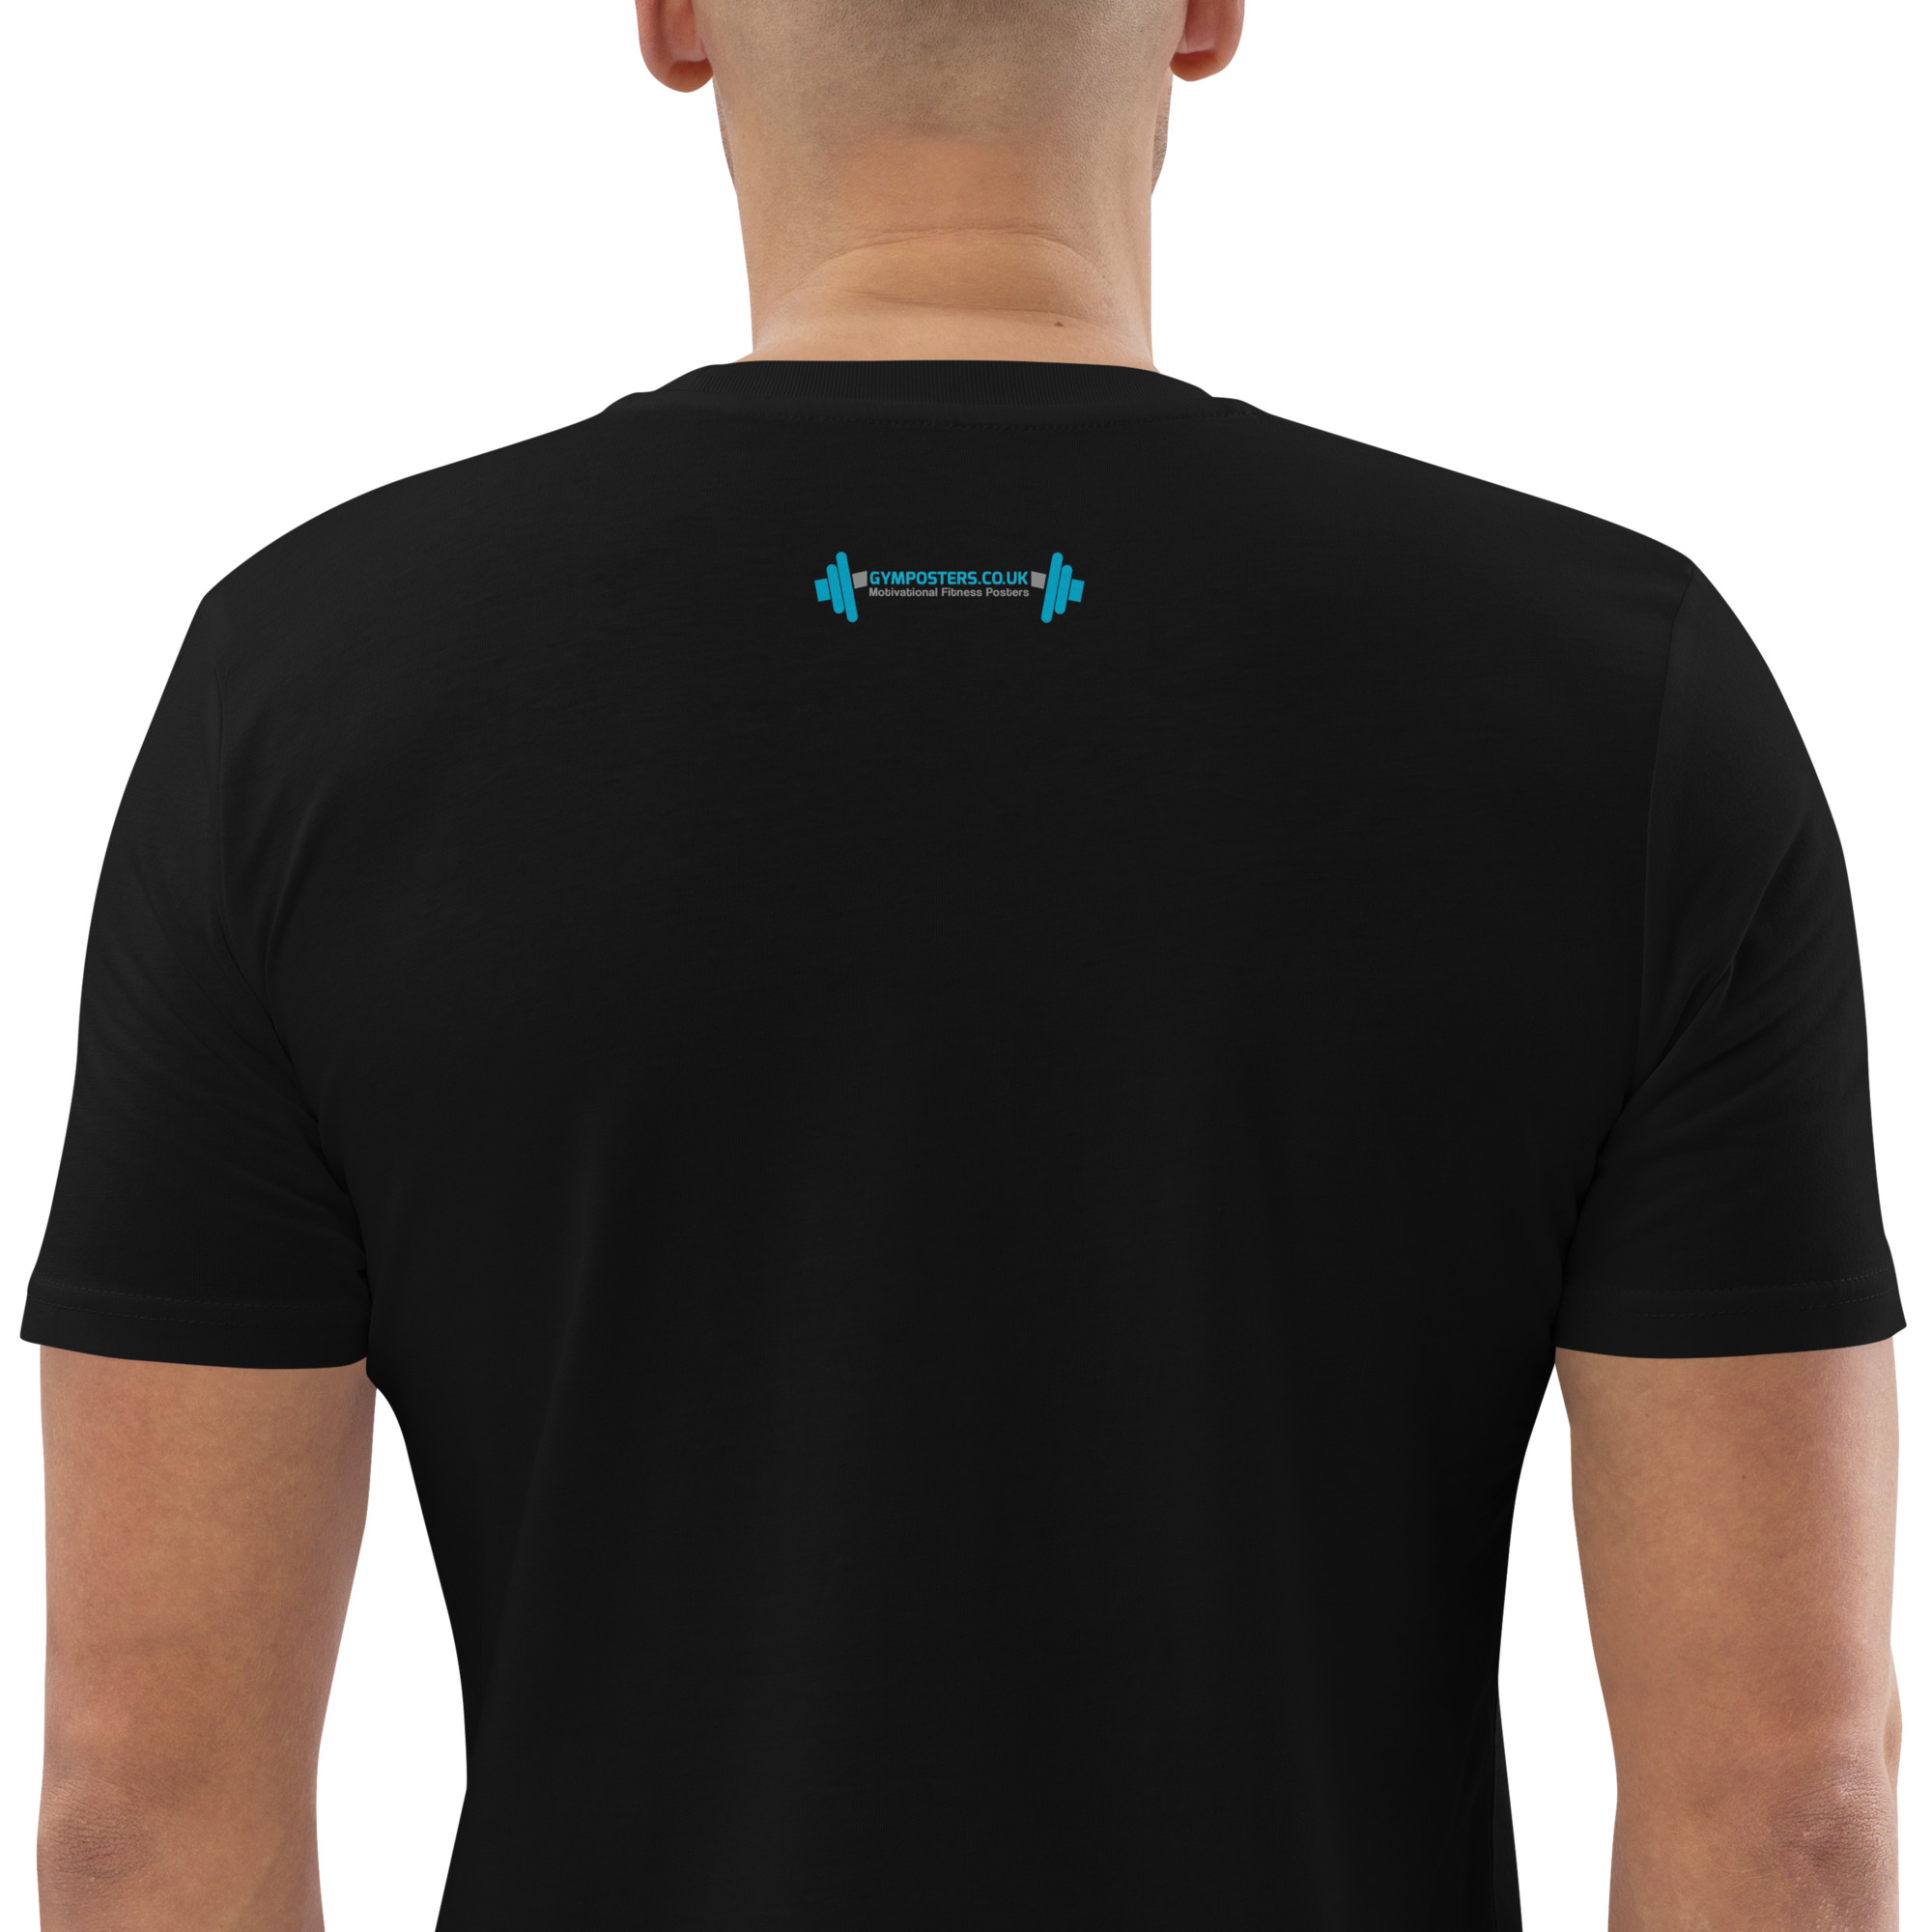 unisex-organic-cotton-t-shirt-black-zoomed-in-2-657855b07b7e4.jpg